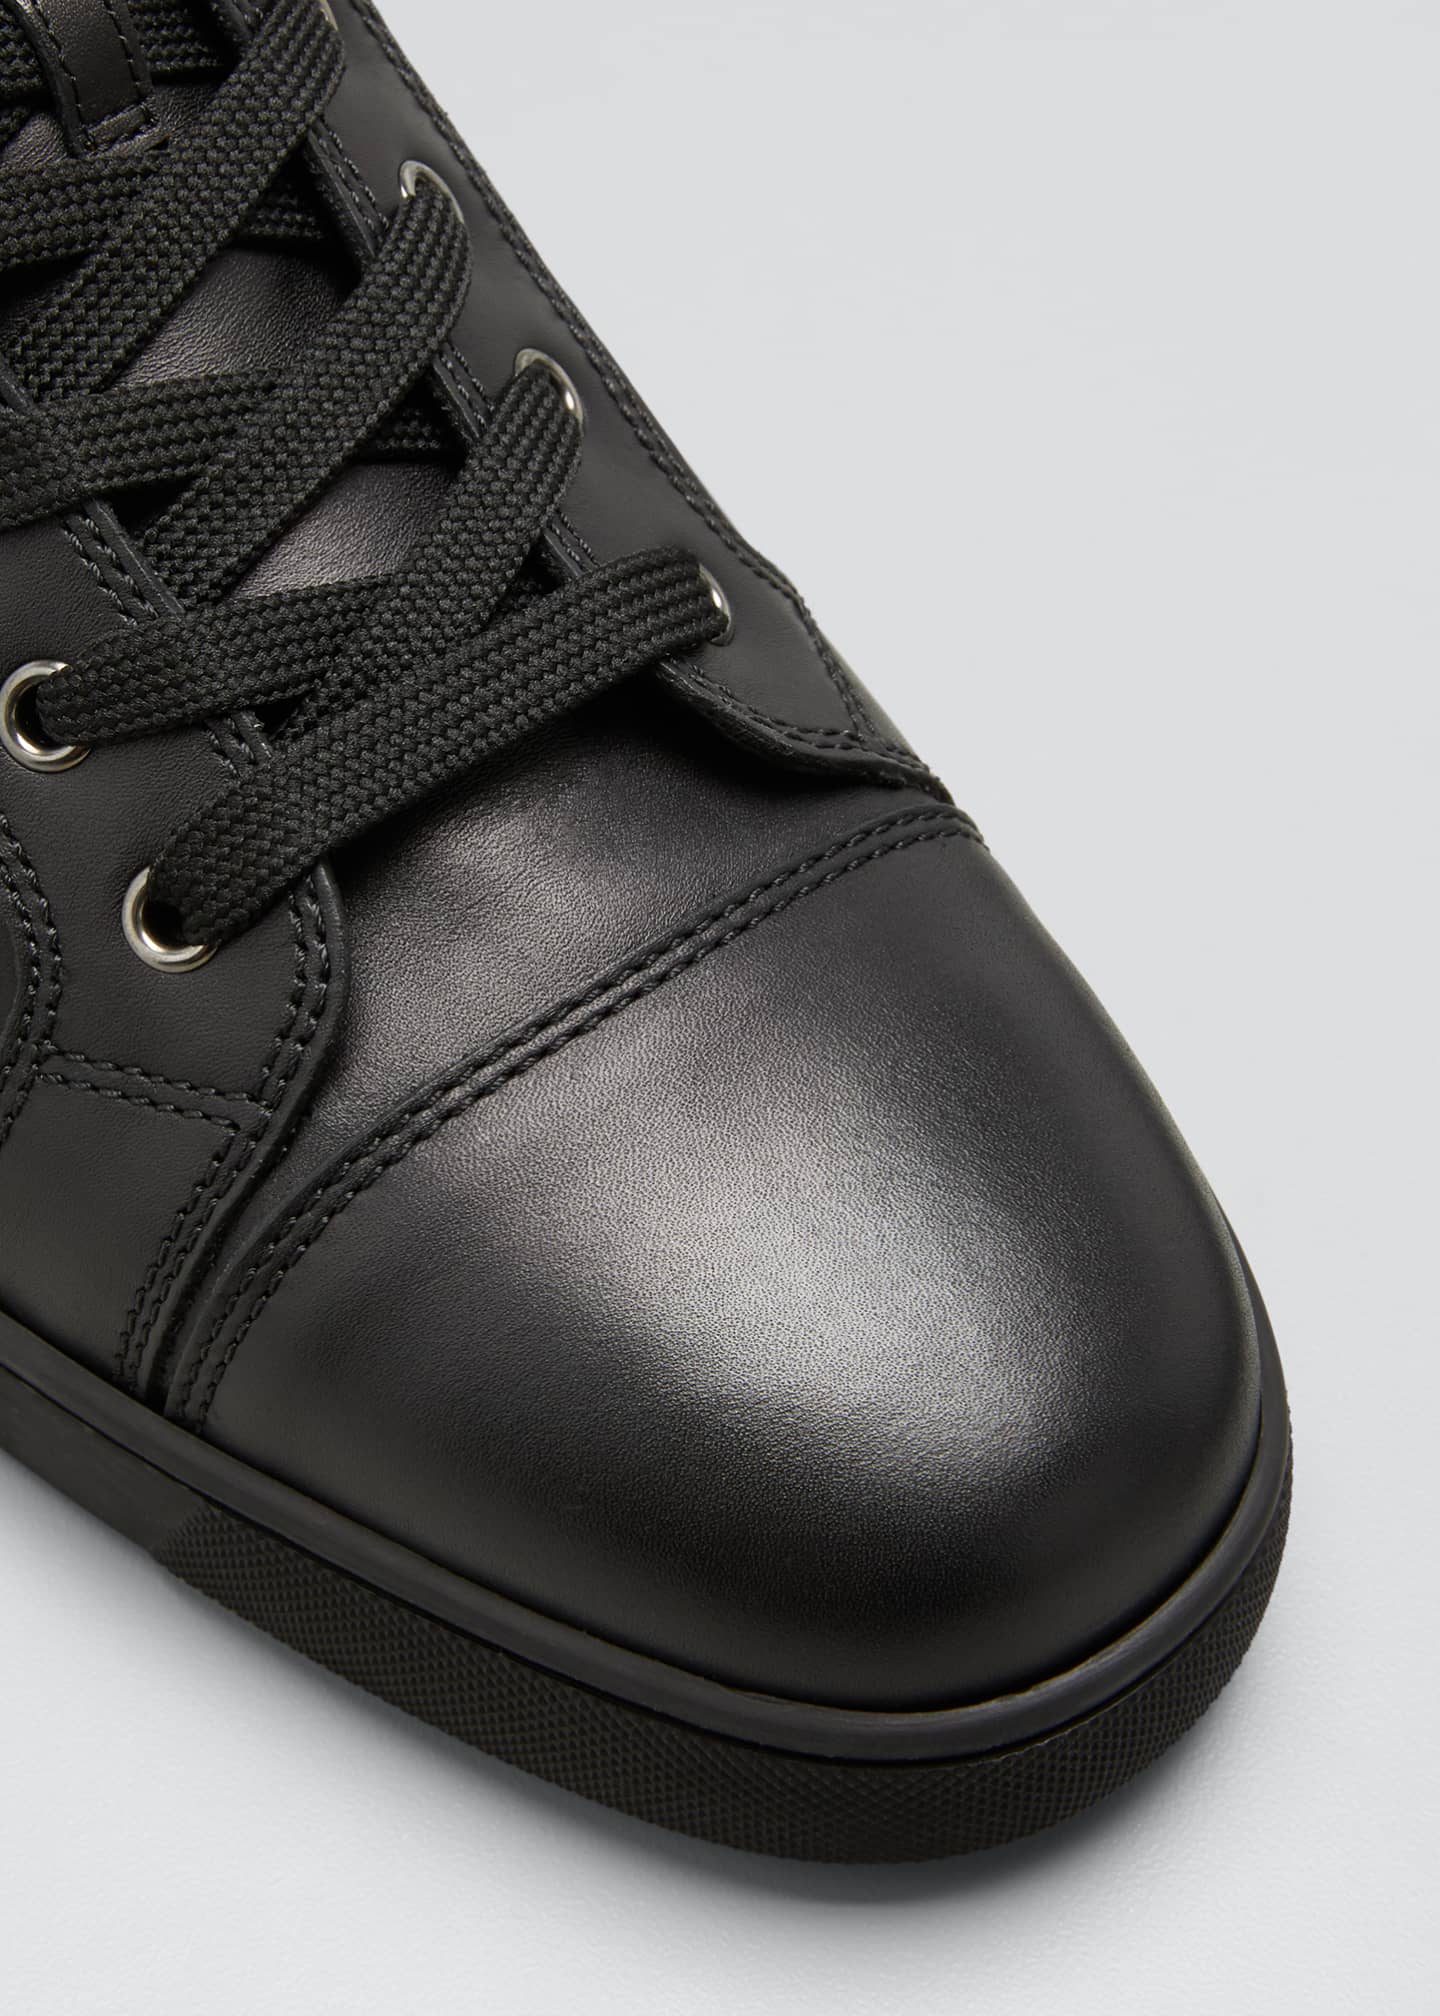 louboutin black leather sneakers